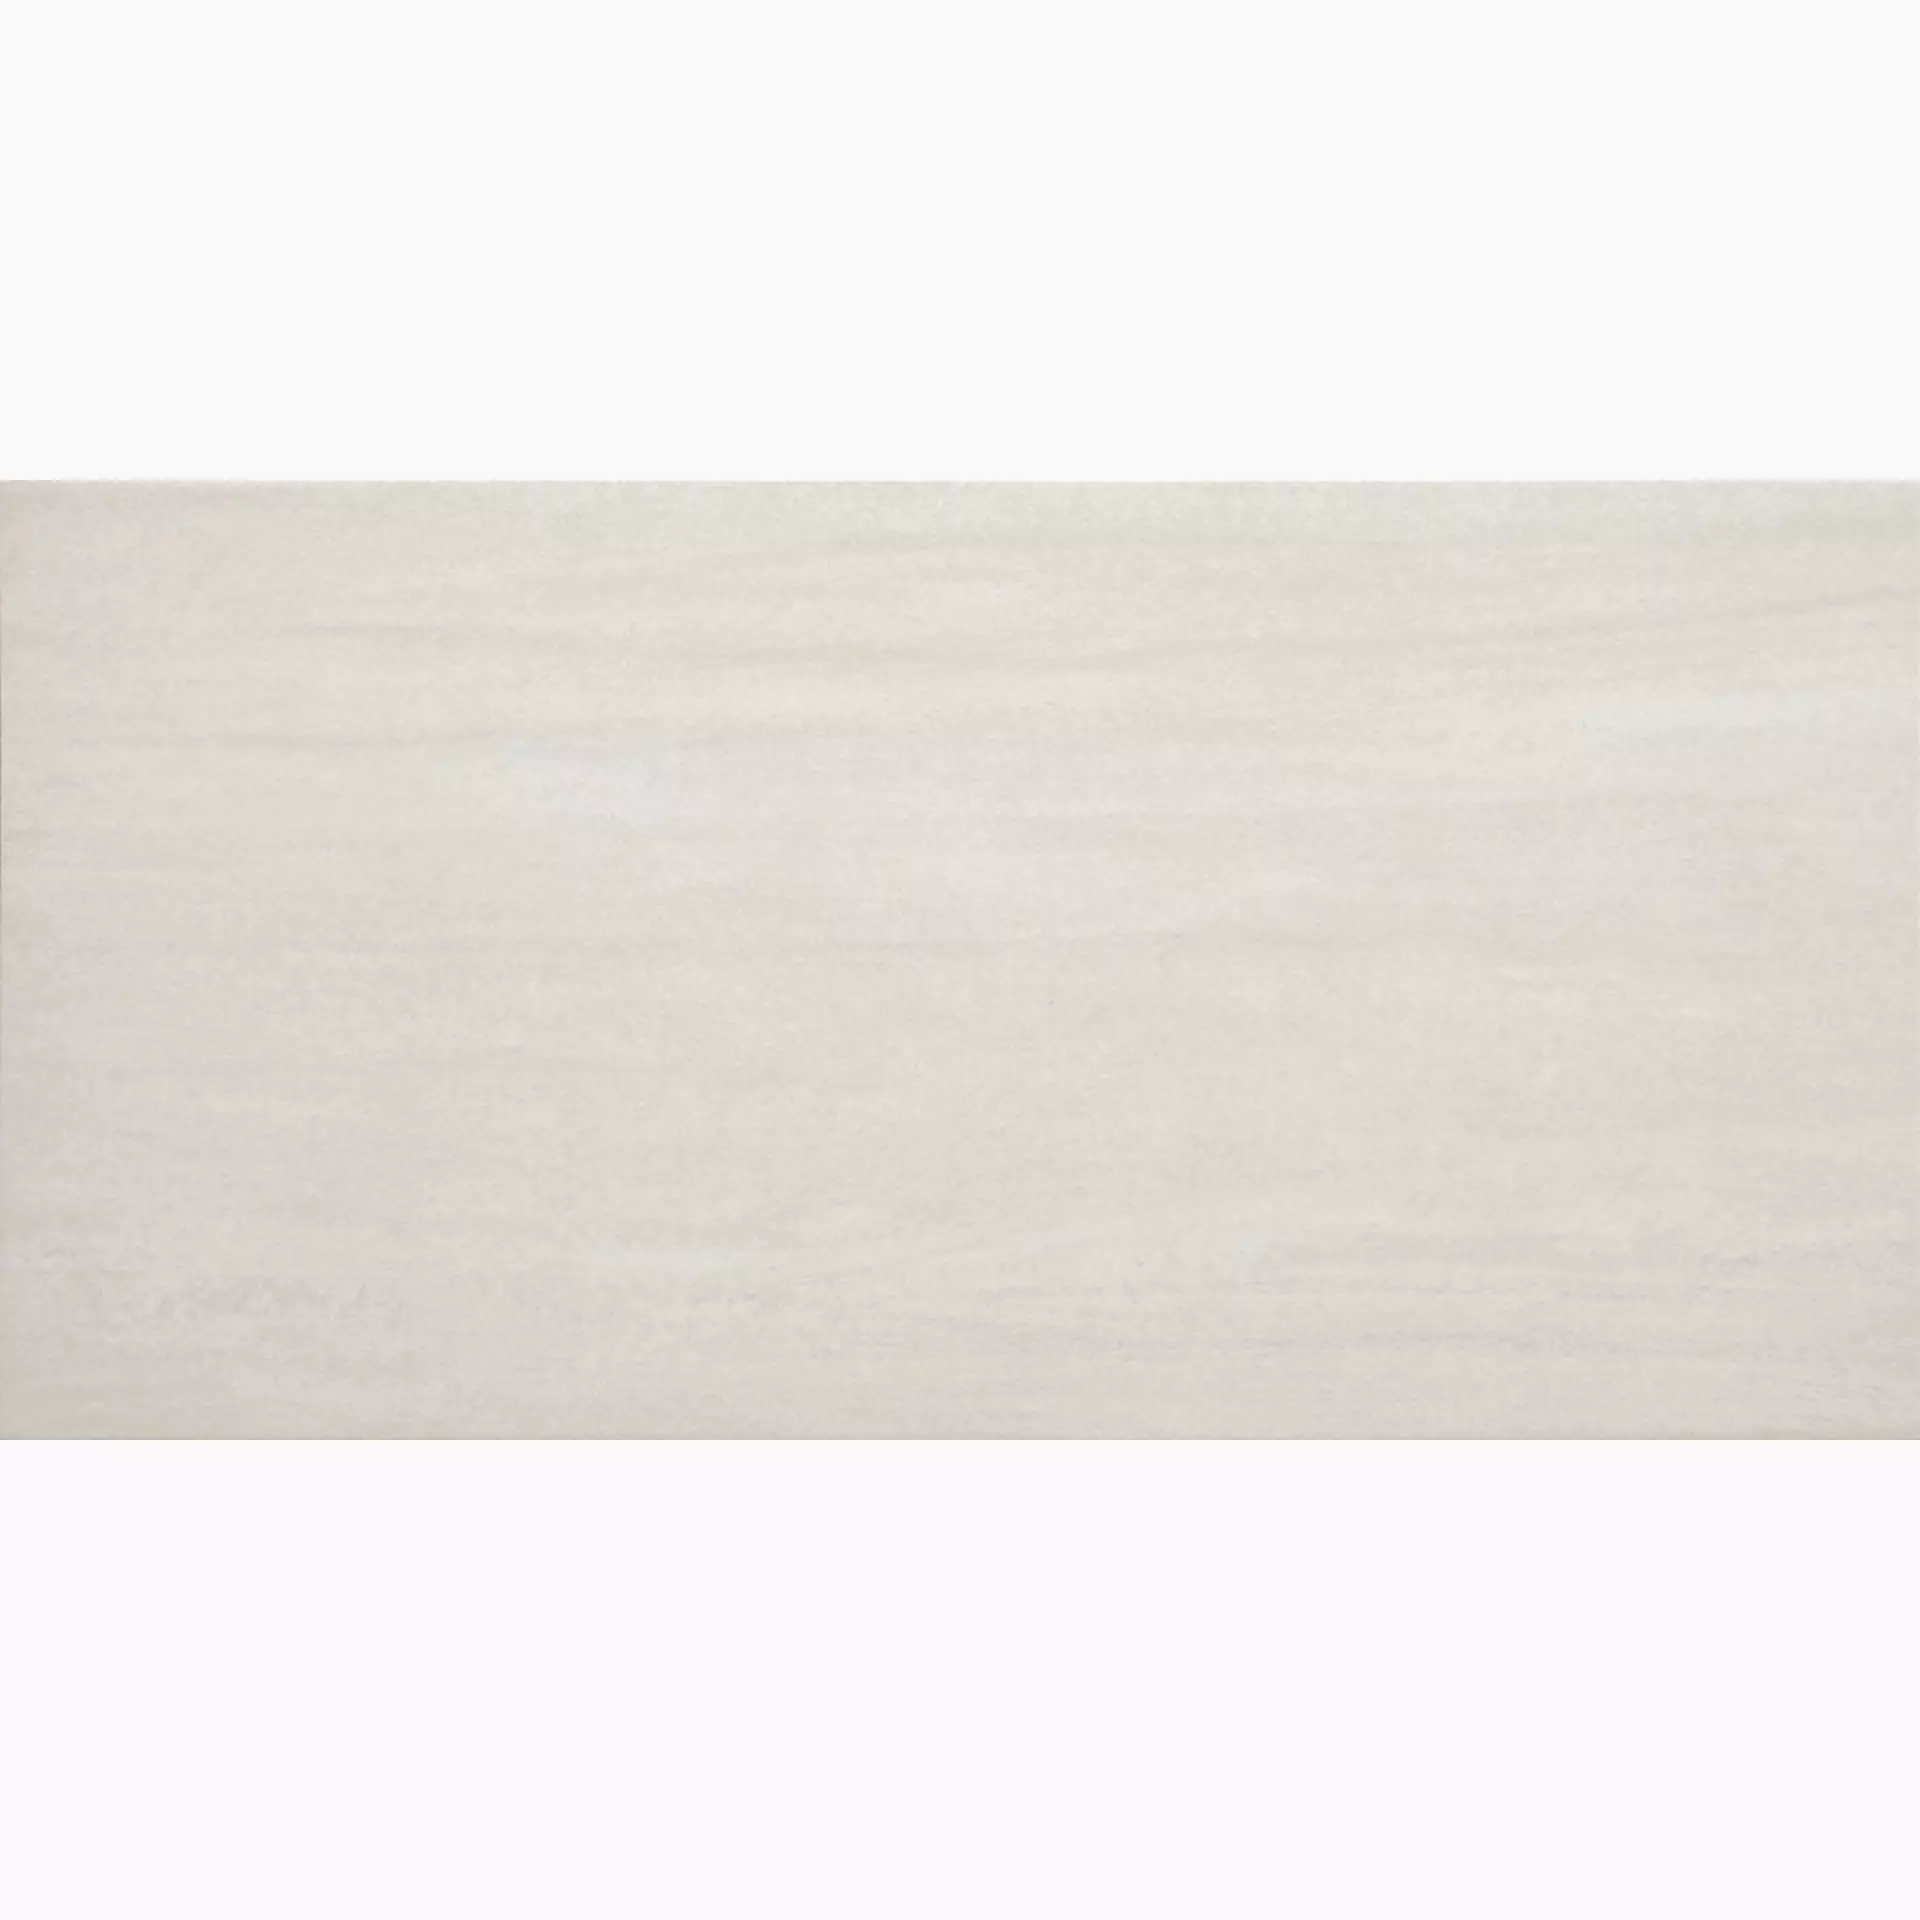 Rondine Contract White Naturale J84569 30,5x60,5cm 8,5mm